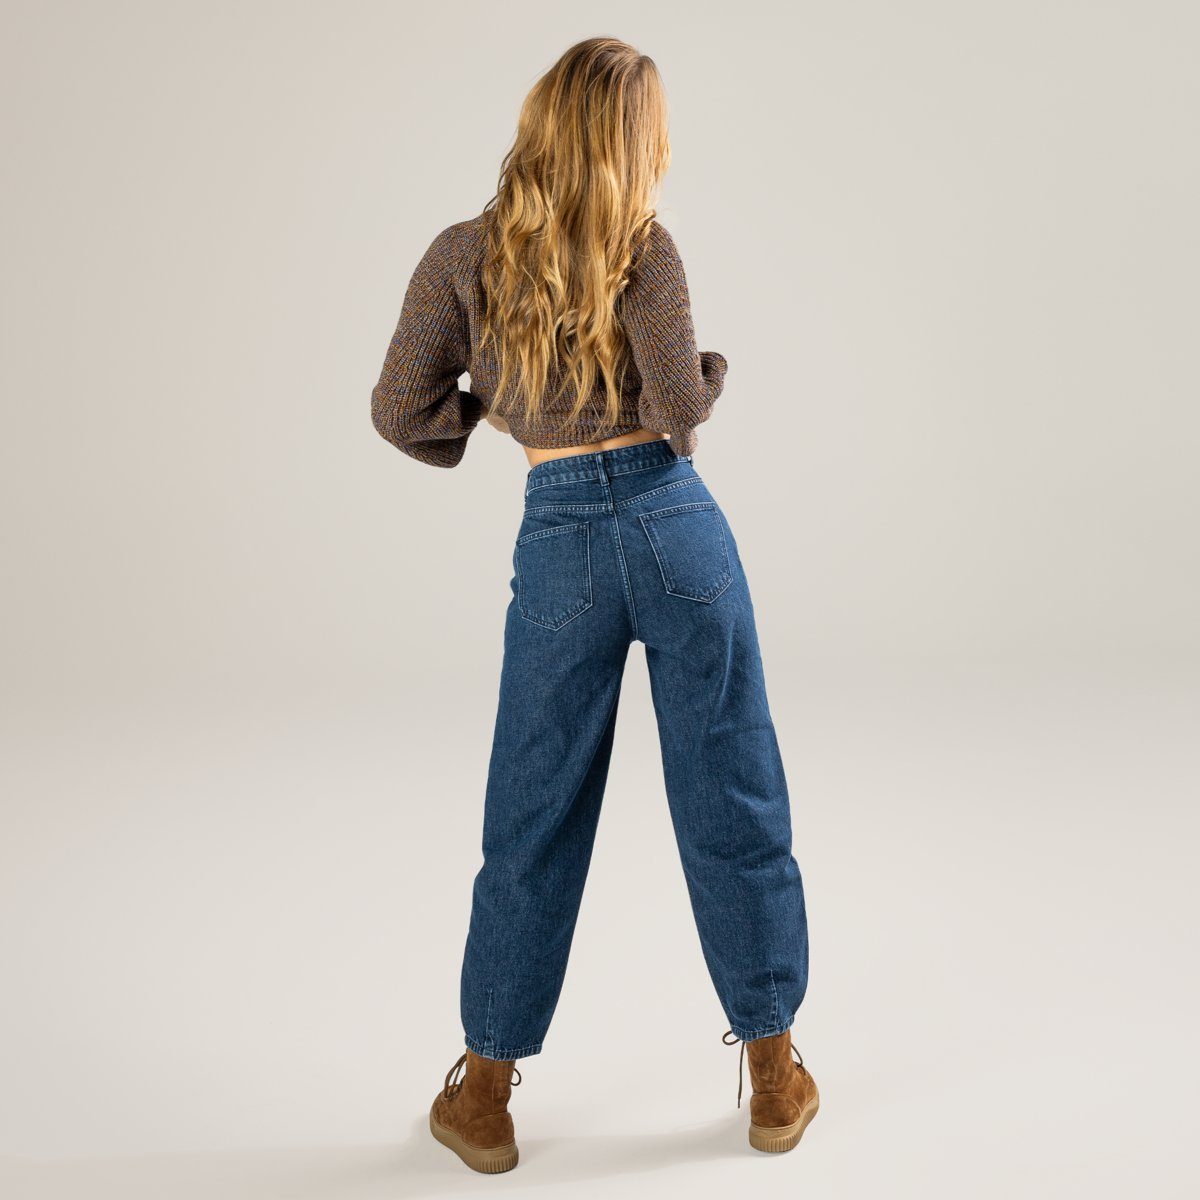 angenehme, Denim Blue Passform PAULETTA Dark 5-Pocket-Hose Jeans-Stoff, Hochwertiger großzügige LIVING CRAFTS